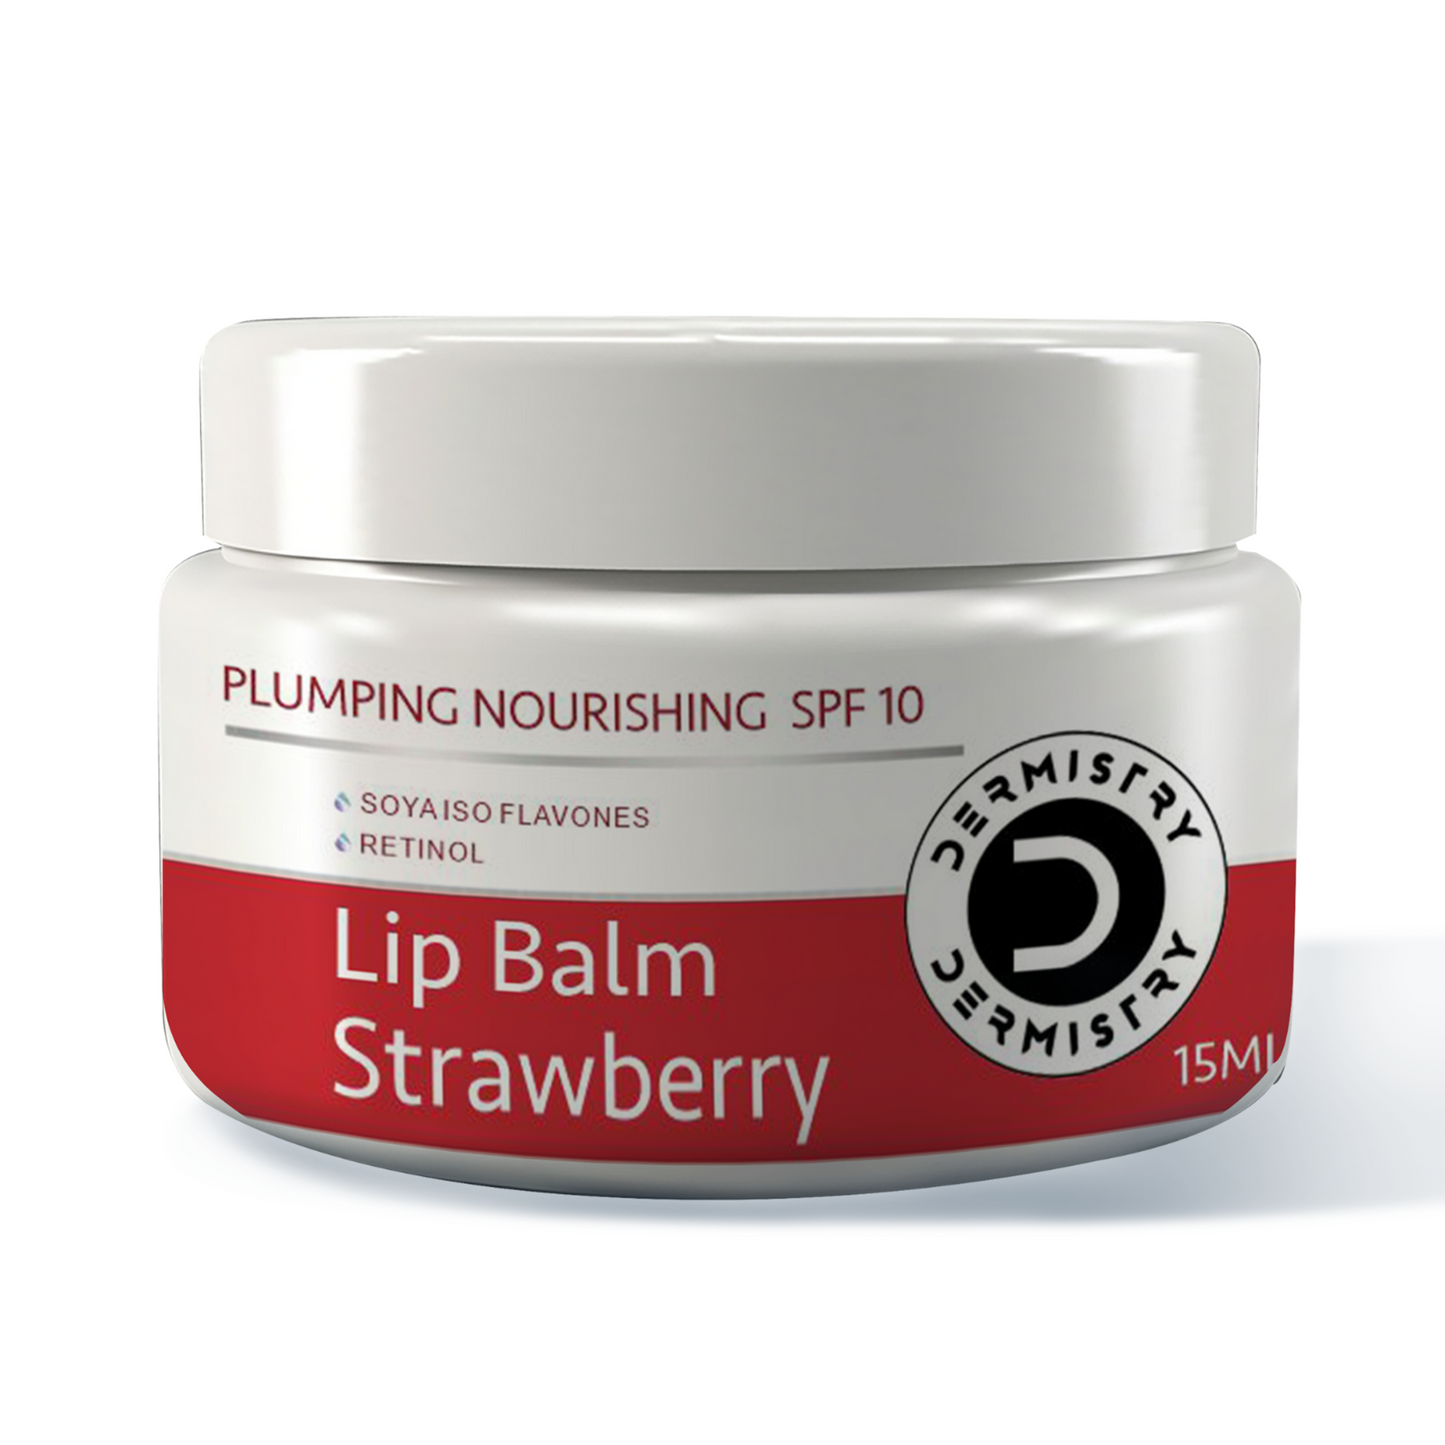 Dermistry Plumping Nourishing SPF10 Lip Balm Strawberry, 15ml